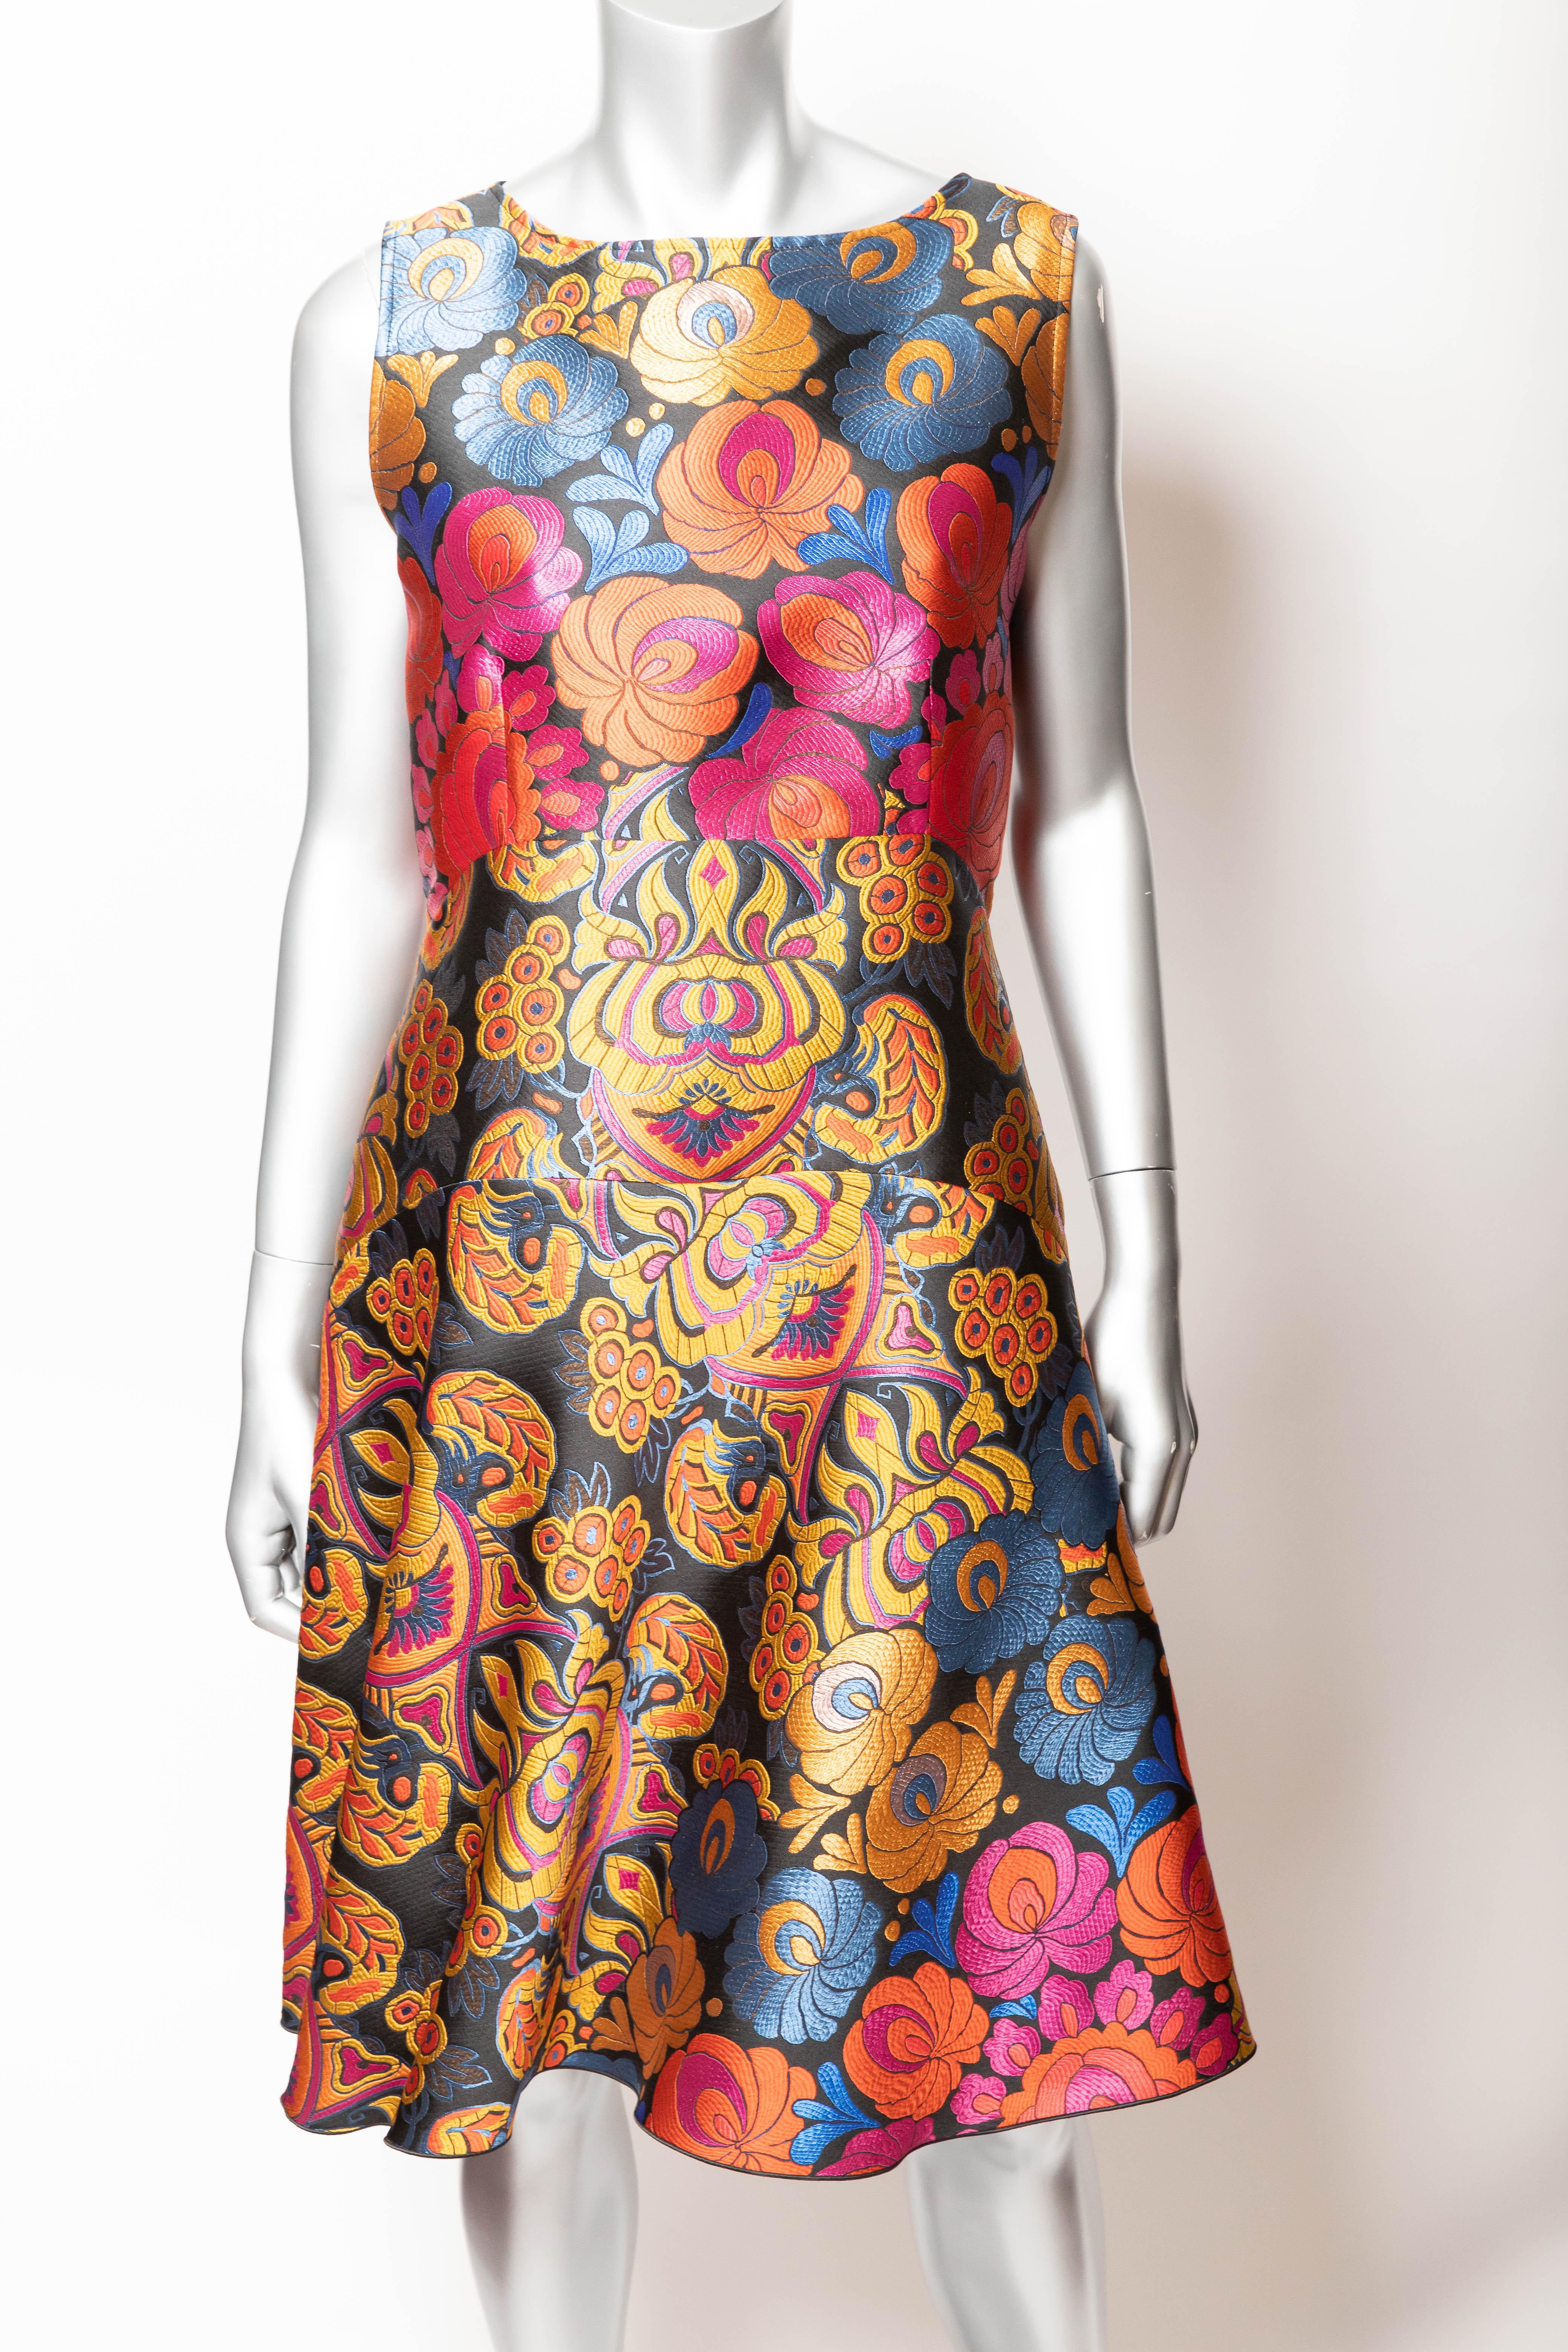 Women's Etro Dress - Size 46 / US 10